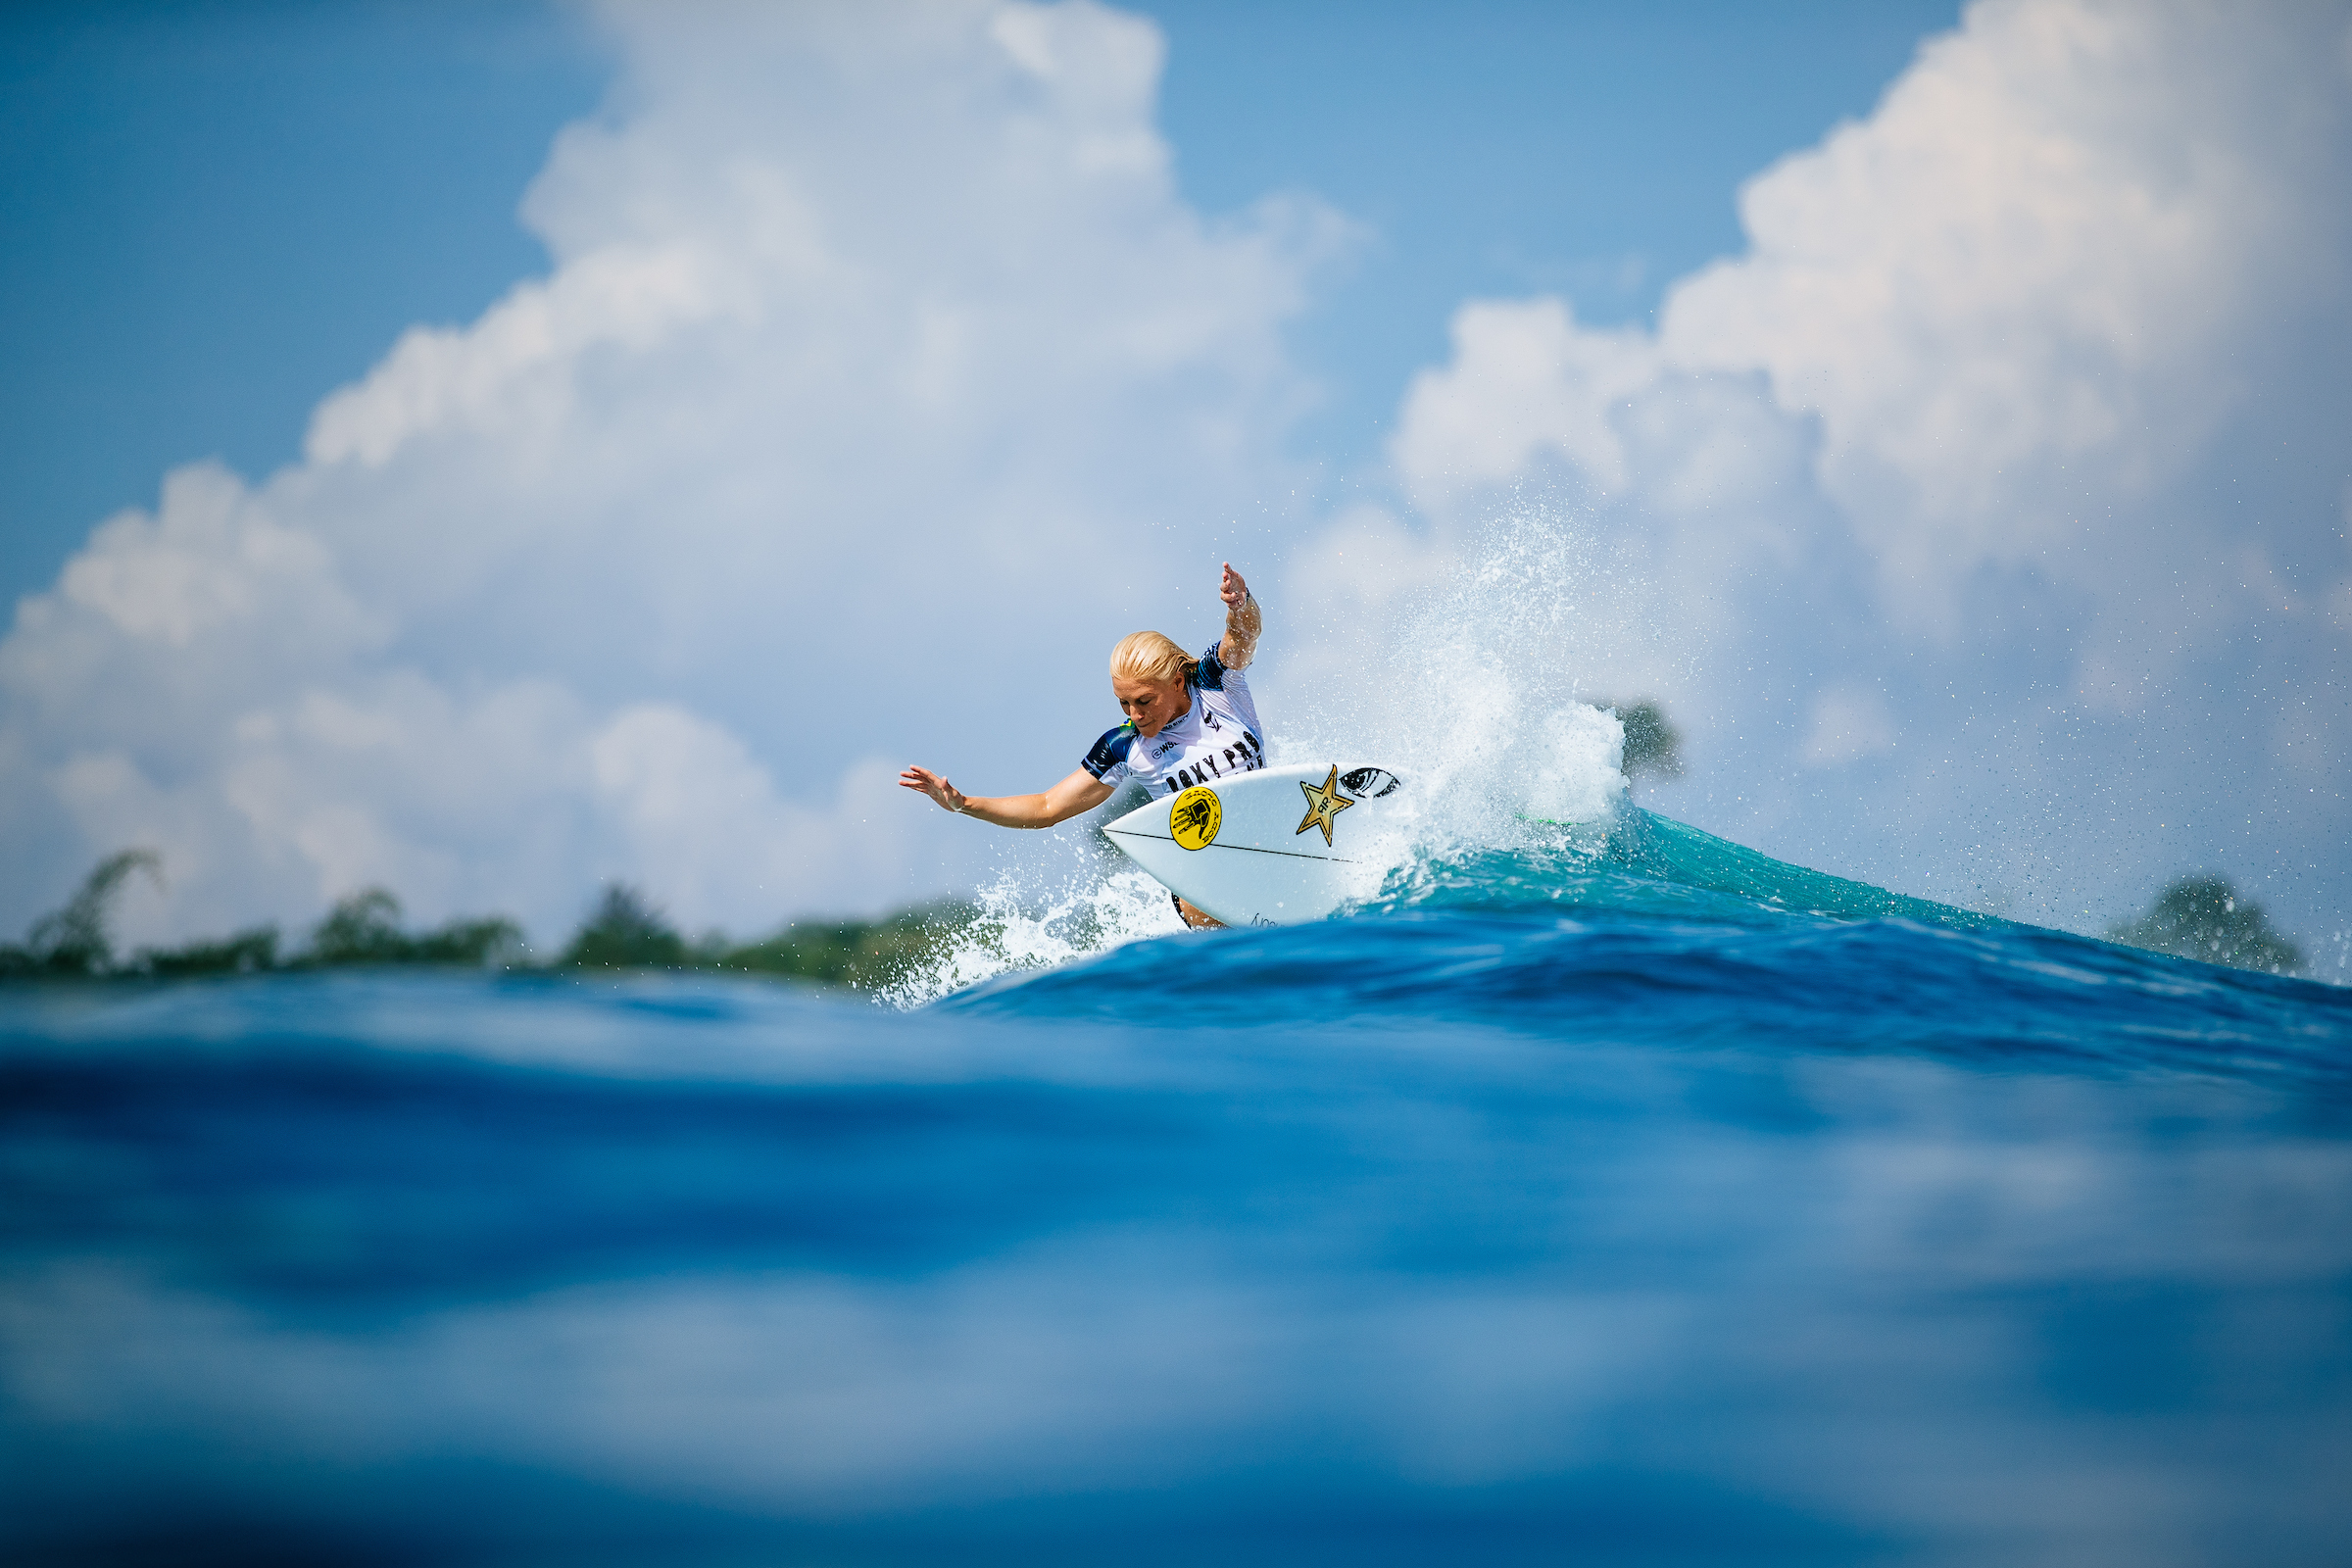 Tatiana Weston-Webb riding a Sharp Eye surfboard at G-Land Indonesia